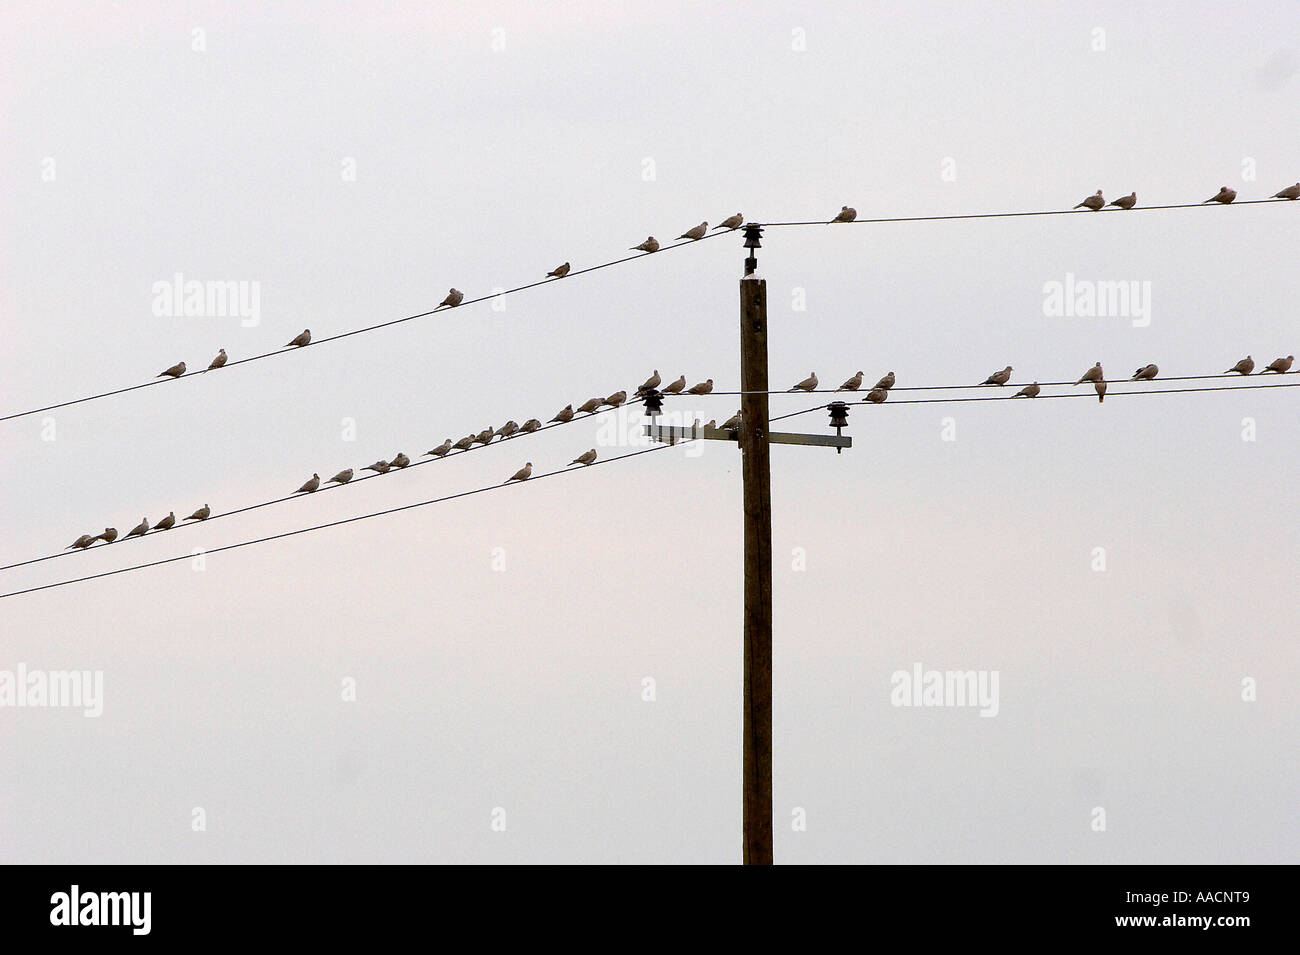 Birds on a power supply line Stock Photo